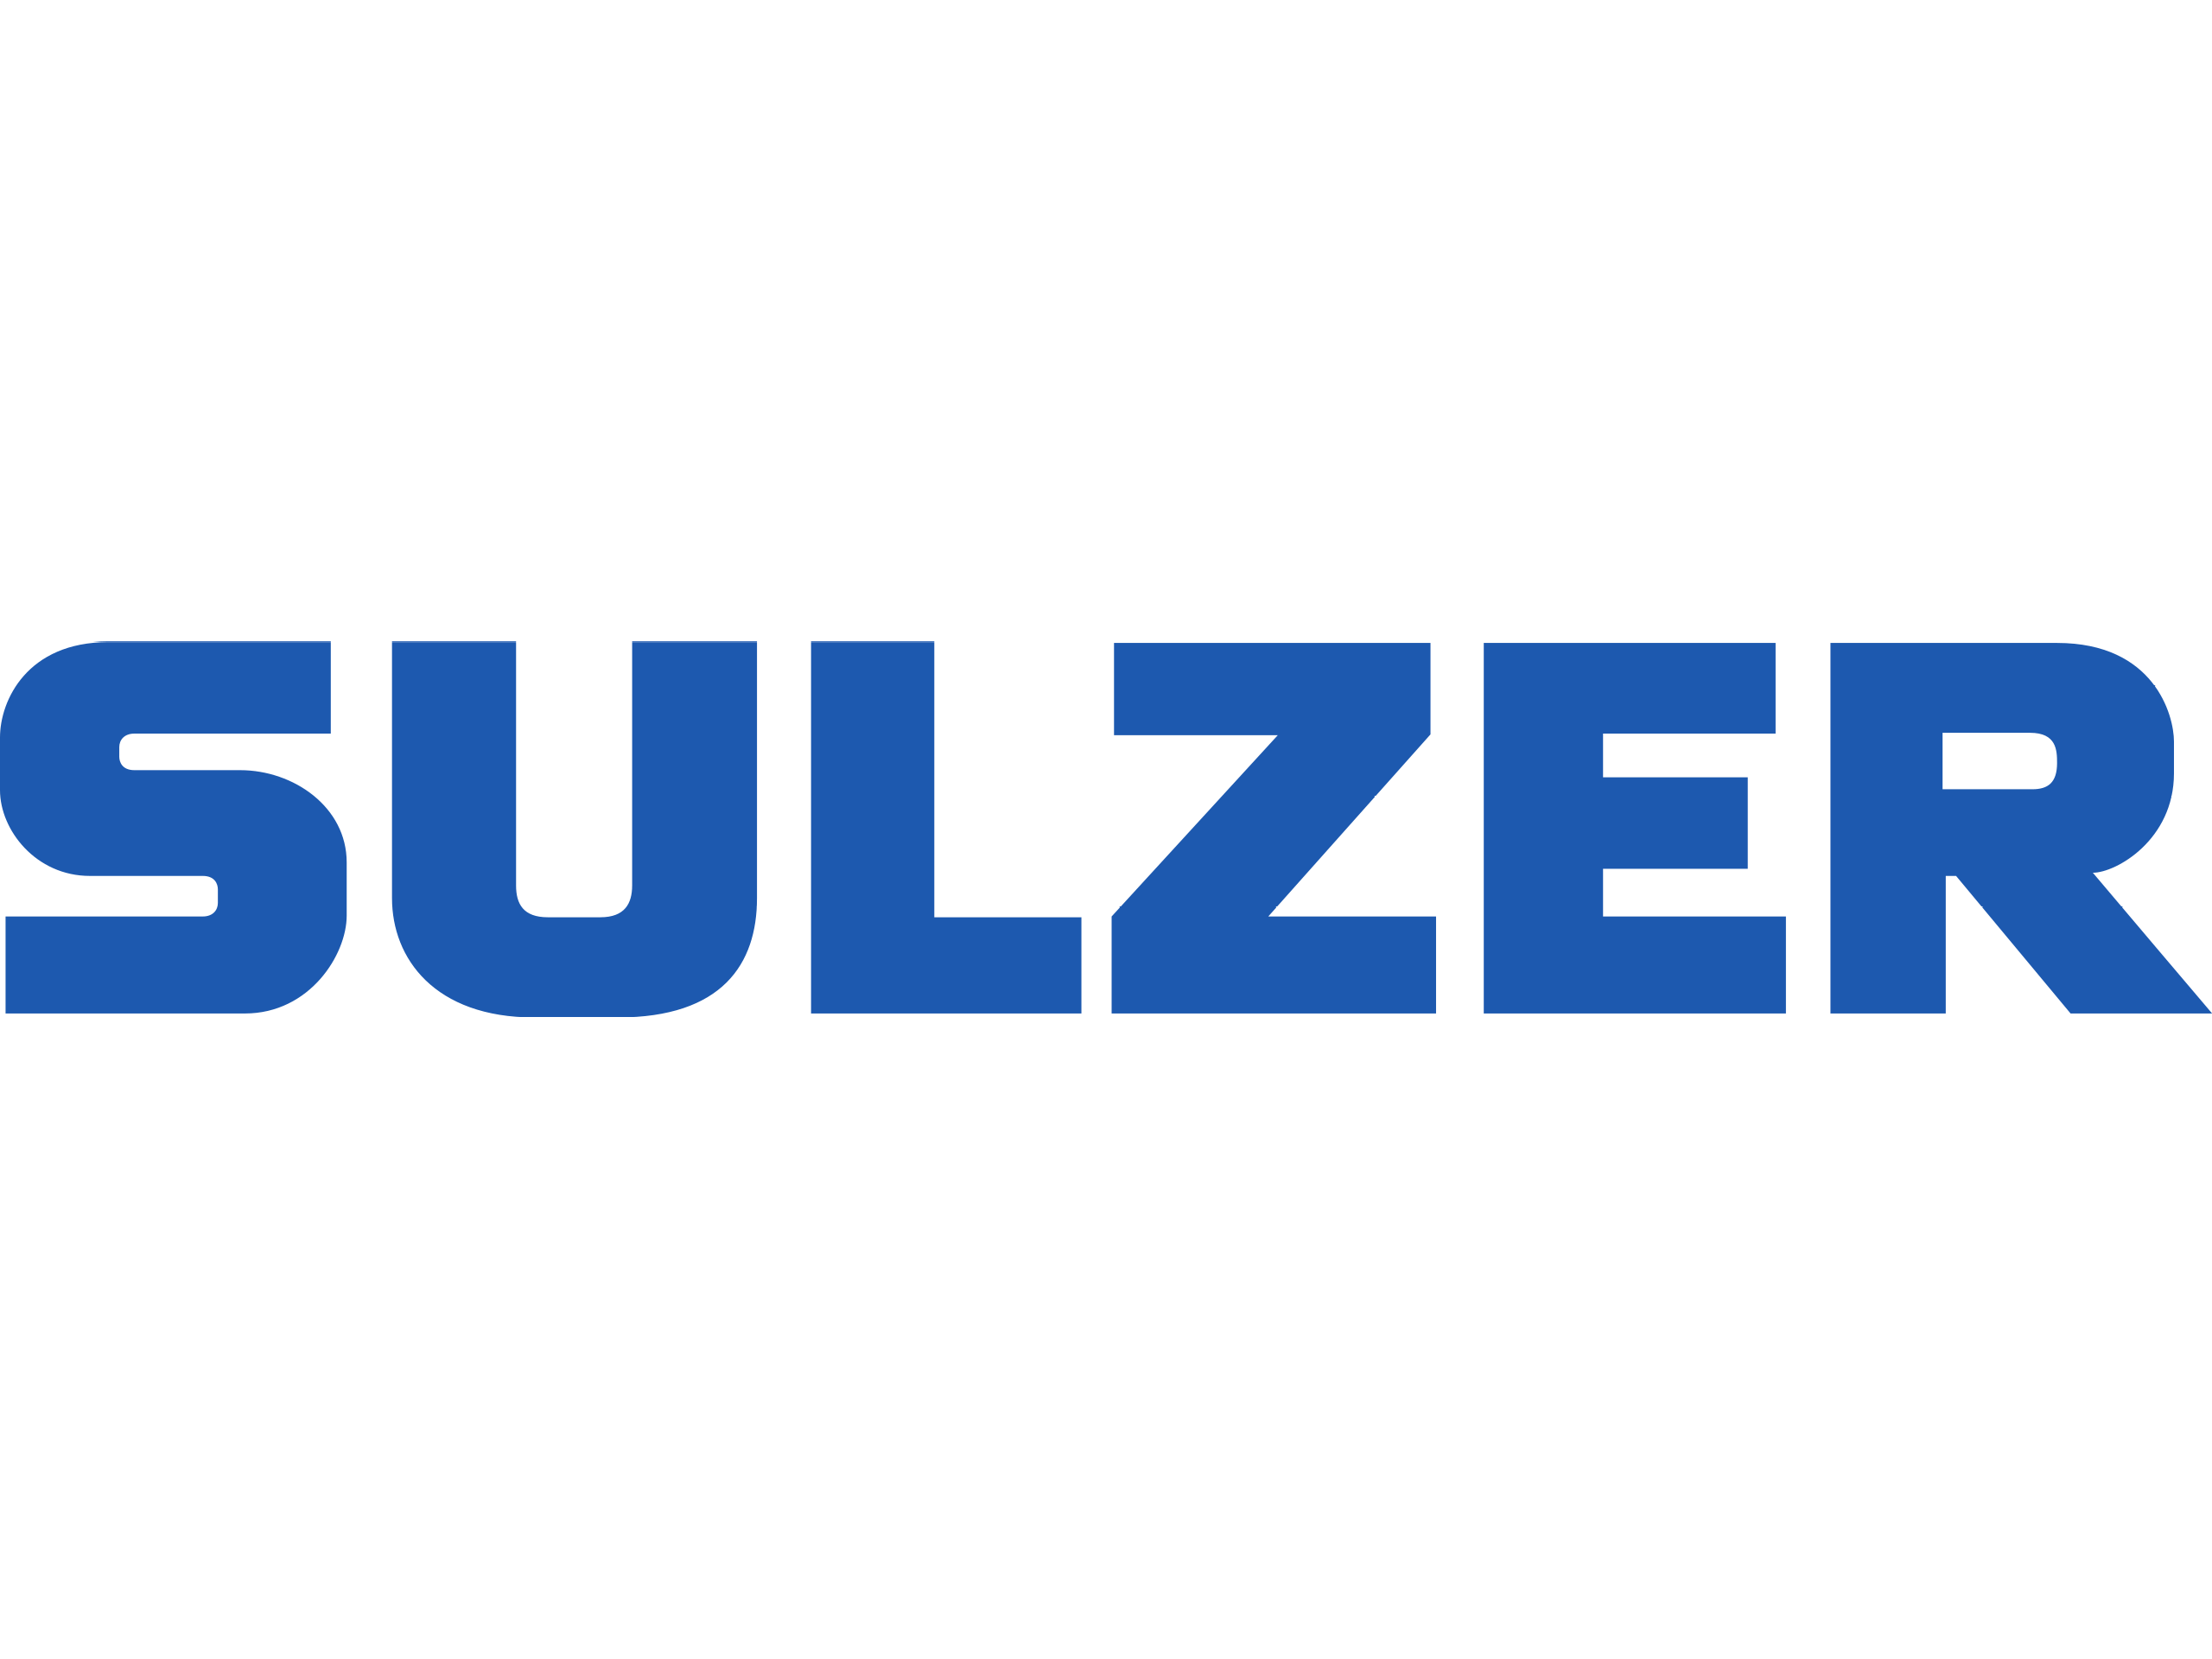 Sulzer logo